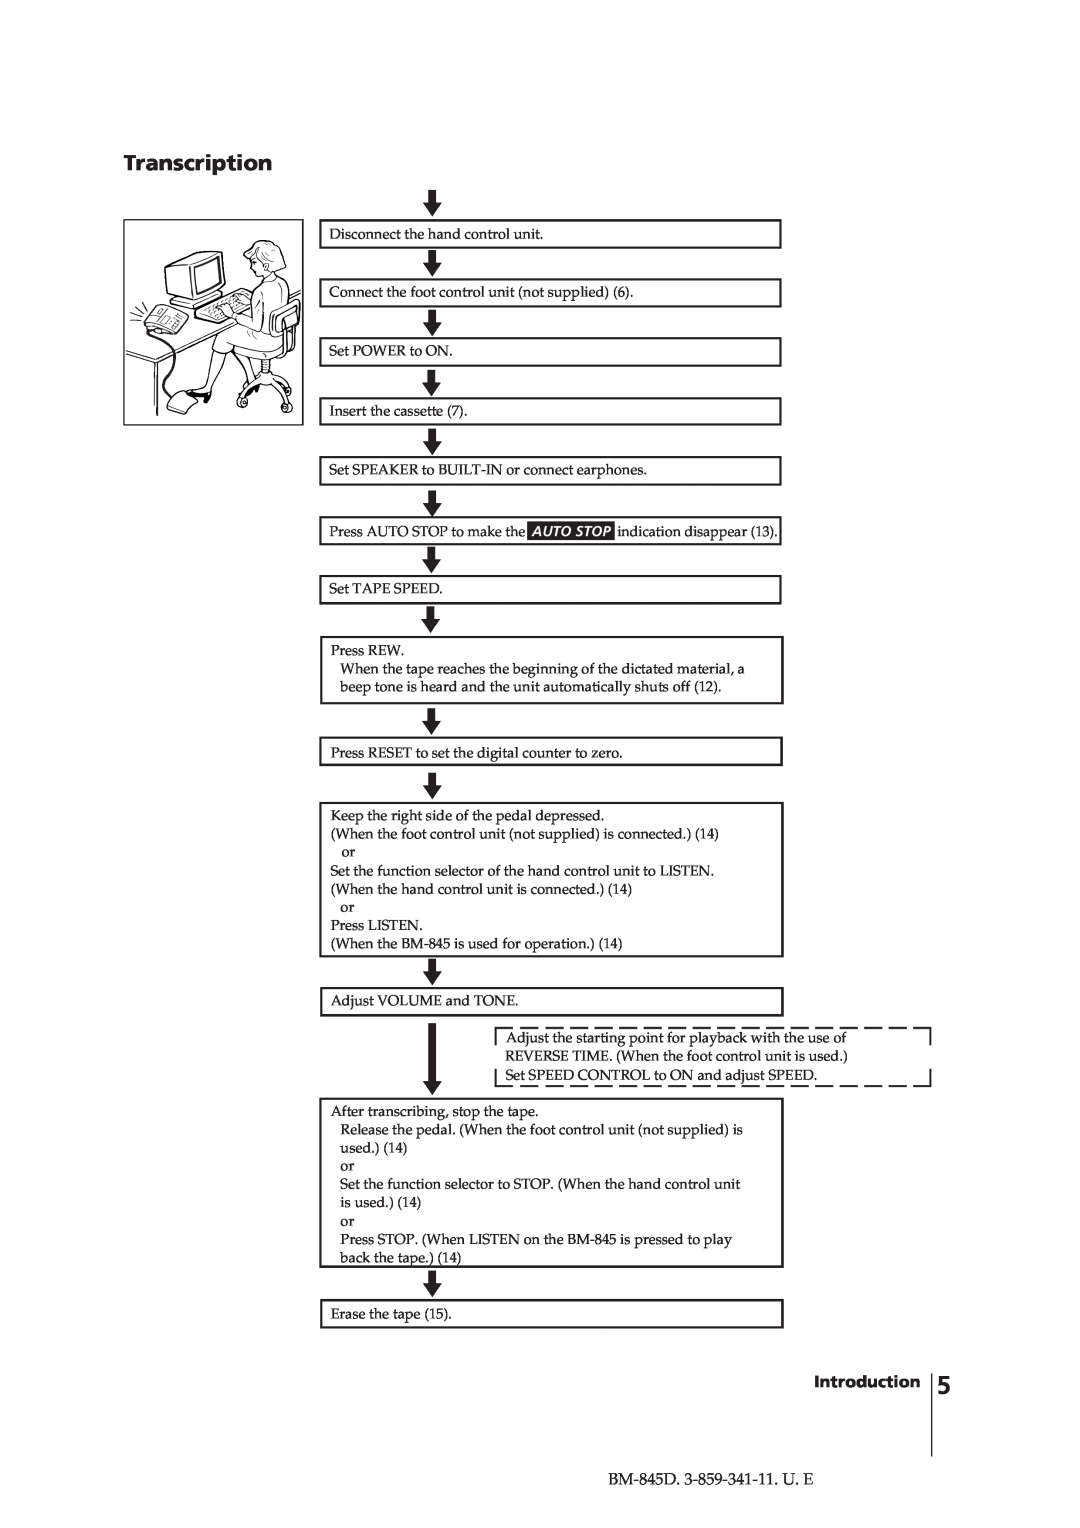 Sony BM-845D manual Transcription, Introduction 